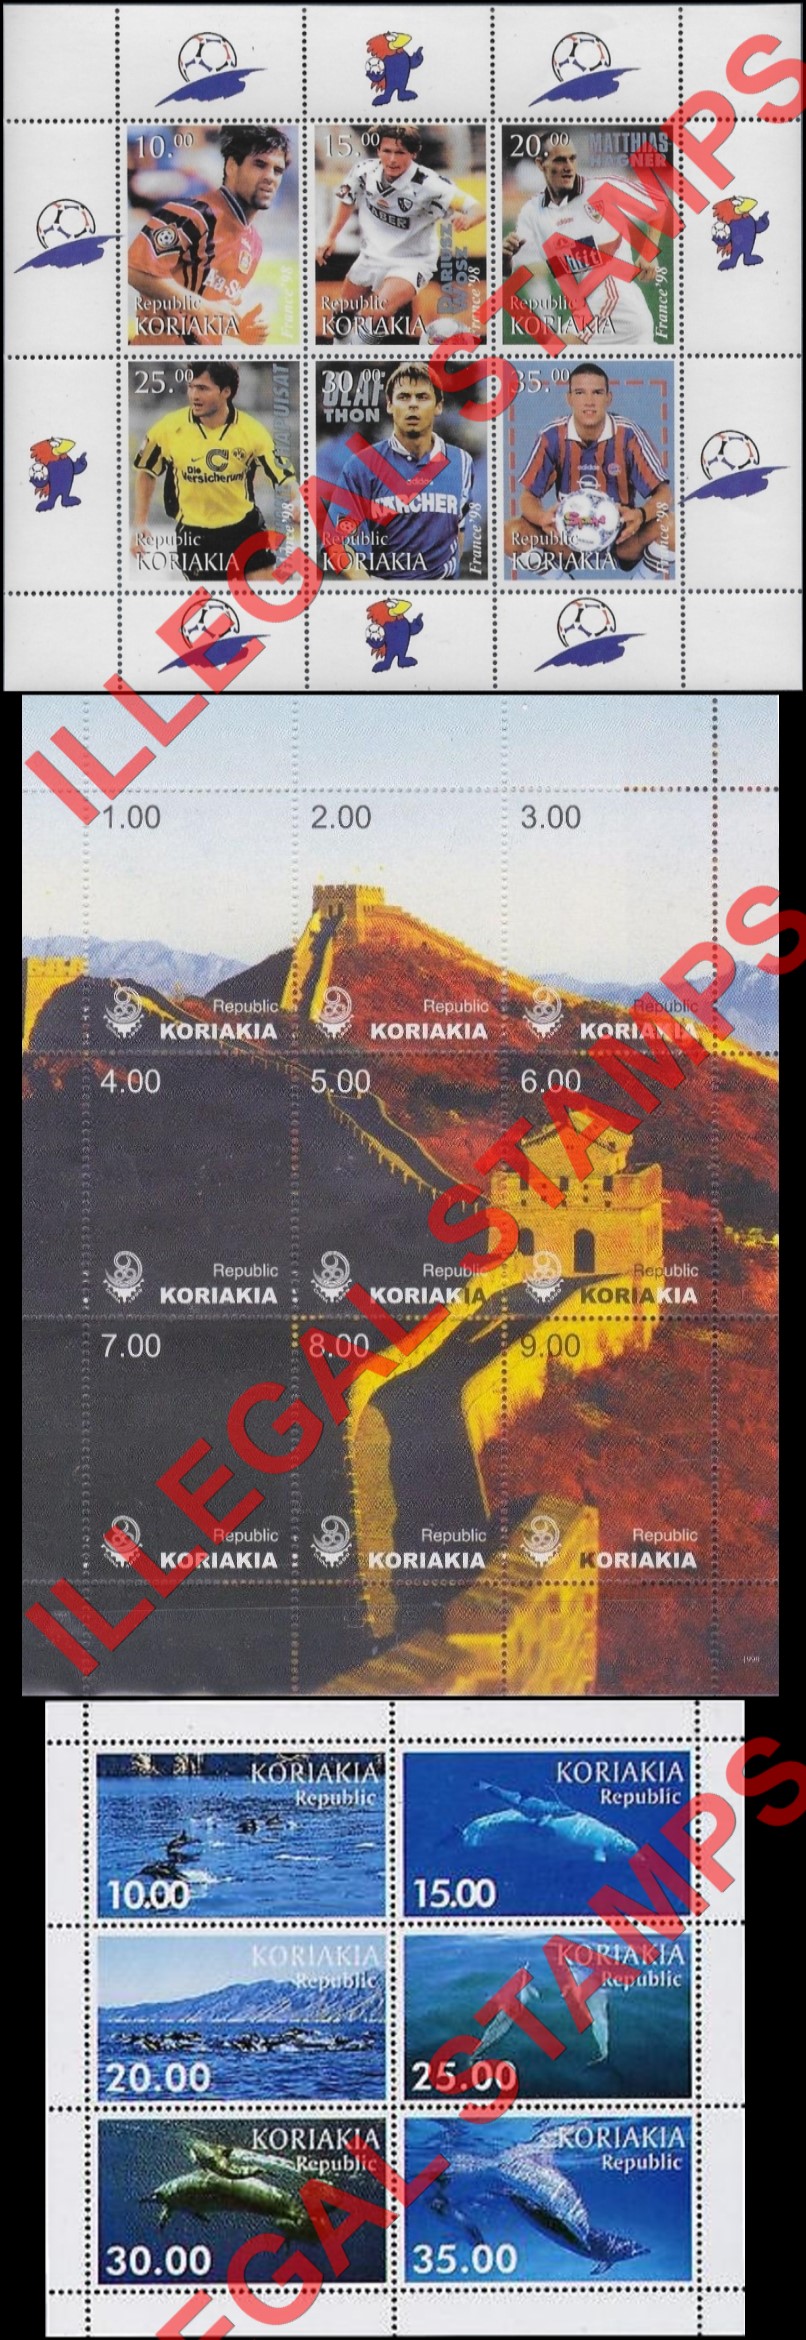 Autonomous Region of Koriakia 1999 Illegal Stamps (Part 2)